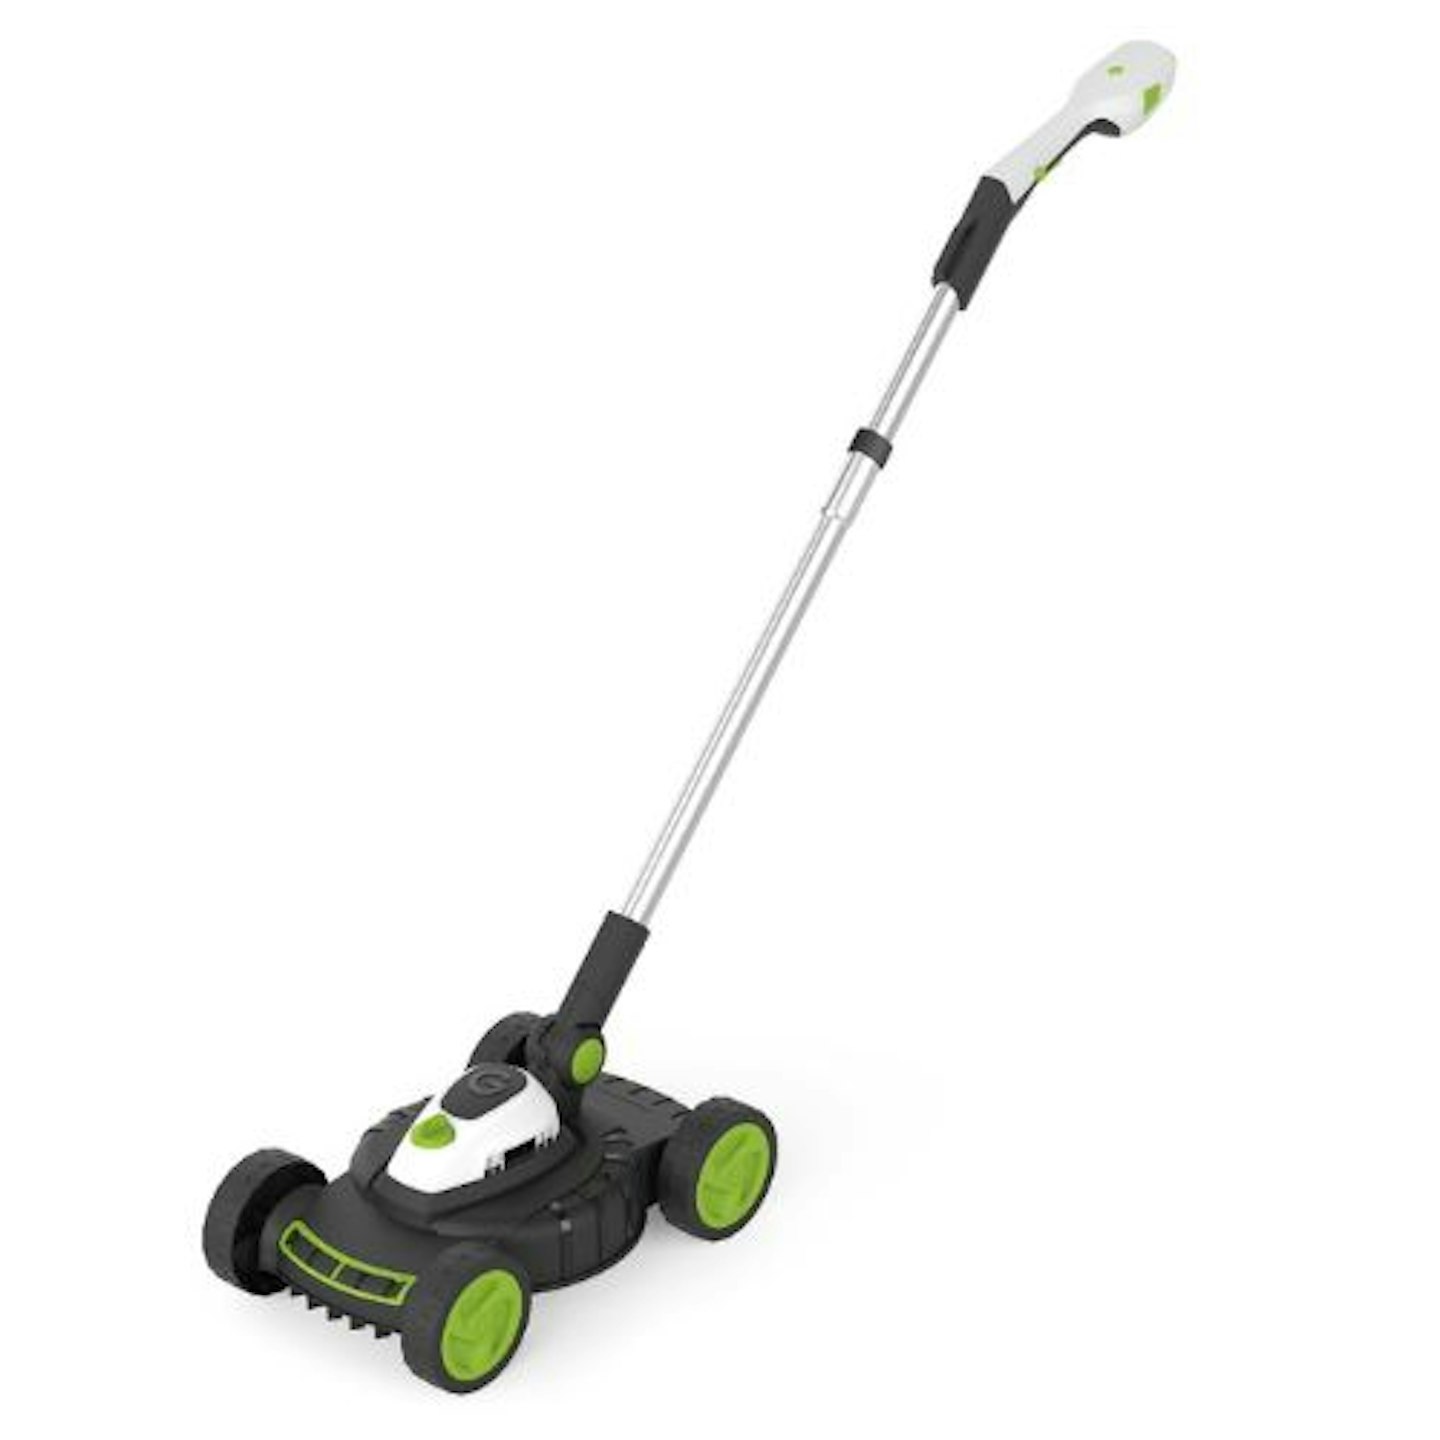 Gtech Small Cordless Lawn Mower